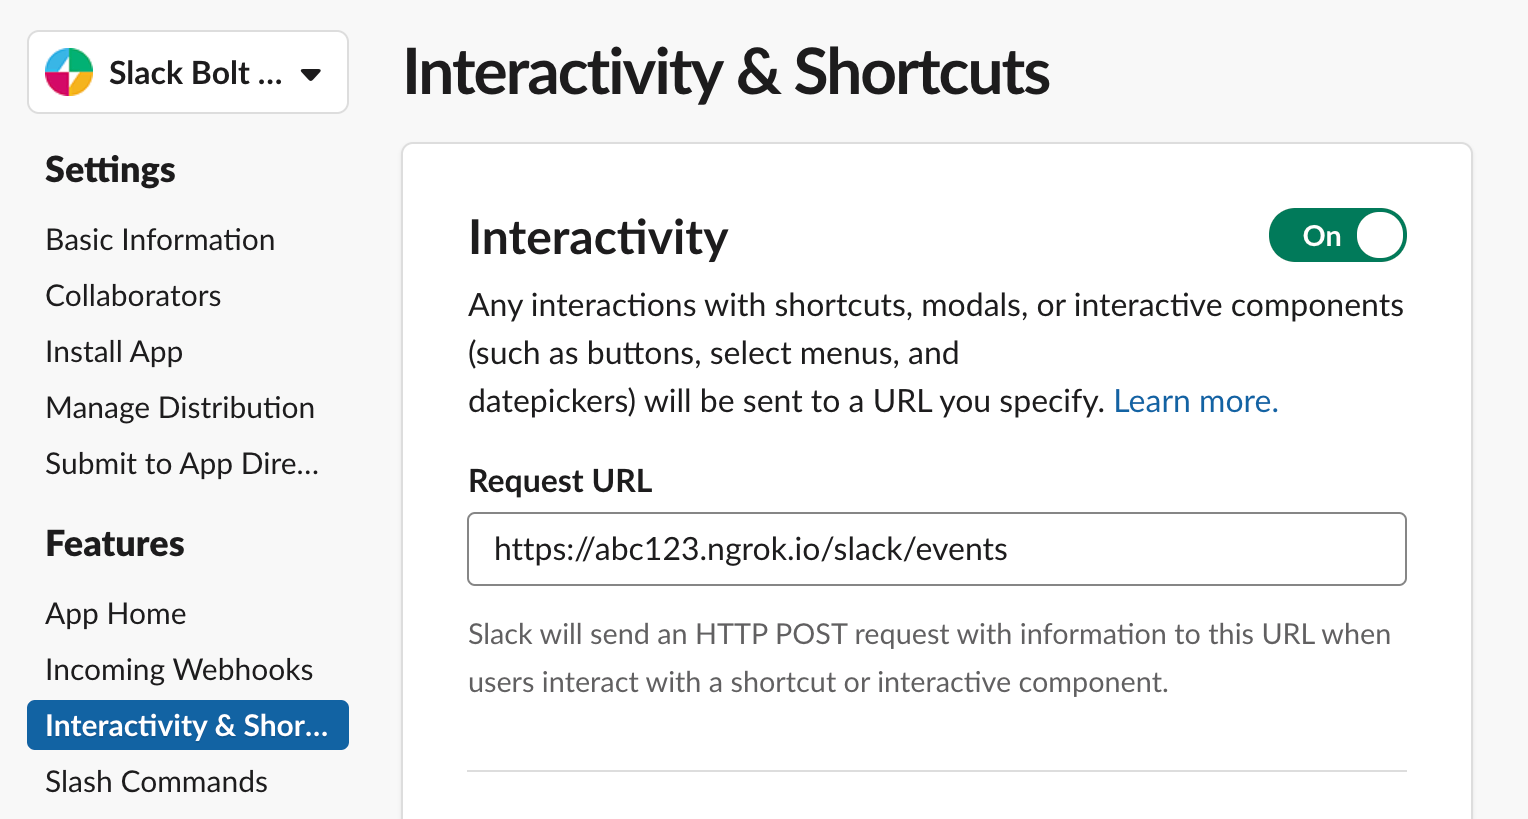 「Interactivity & Shortcuts」ページ